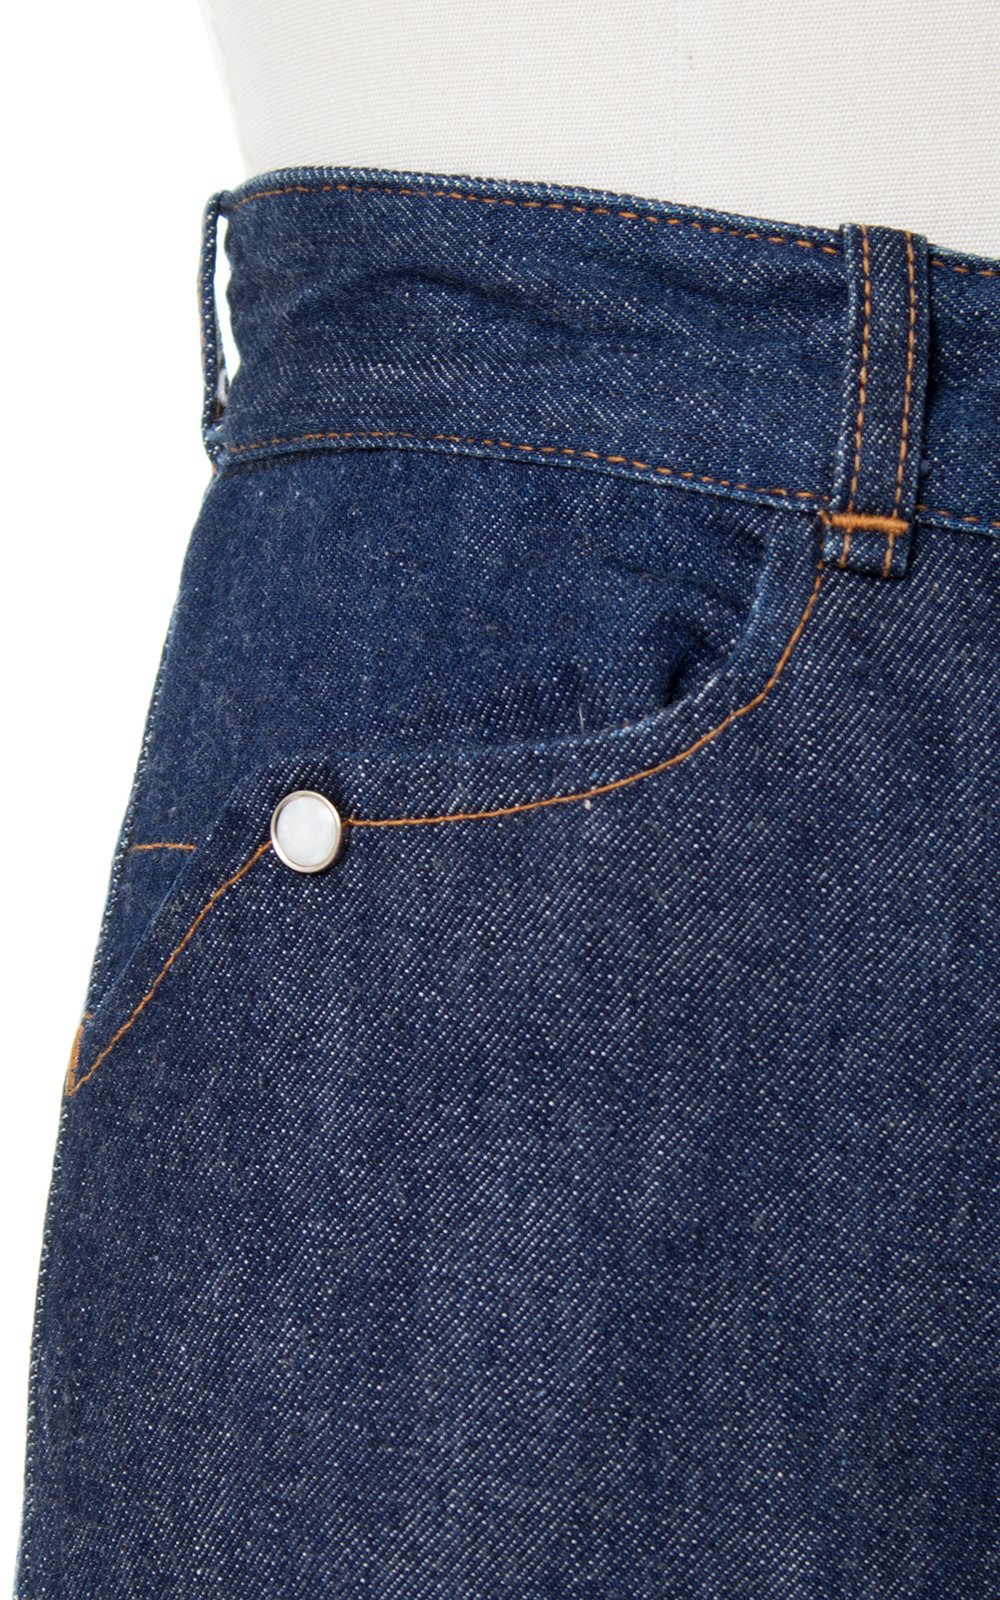 1950s Pearl Snap Western Denim Jeans